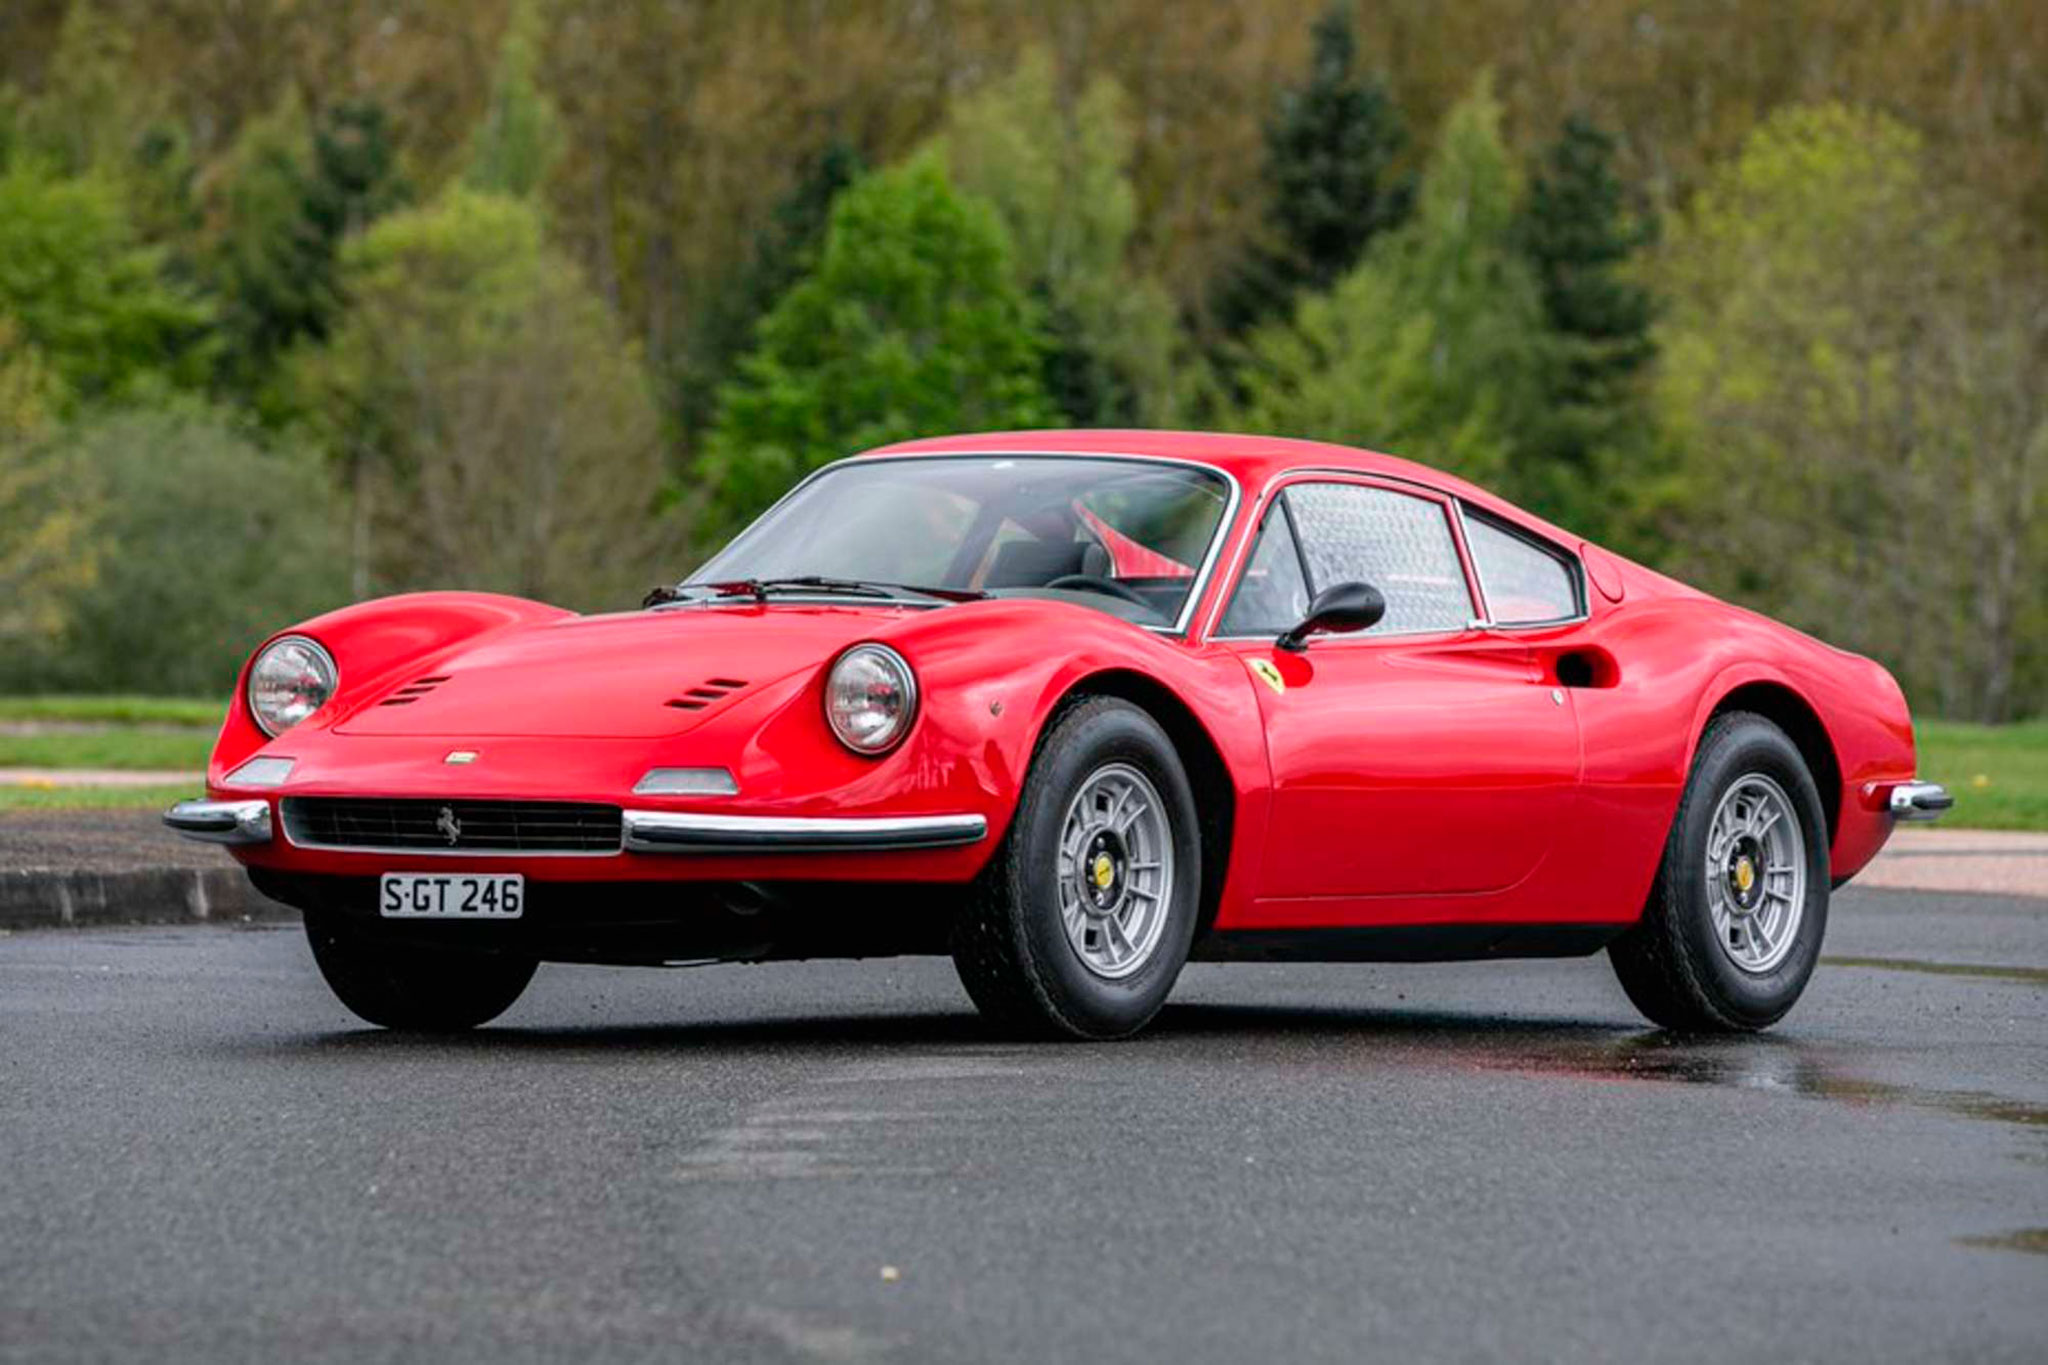 1971 Ferrari Dino 246 GT adjugée £180,000.